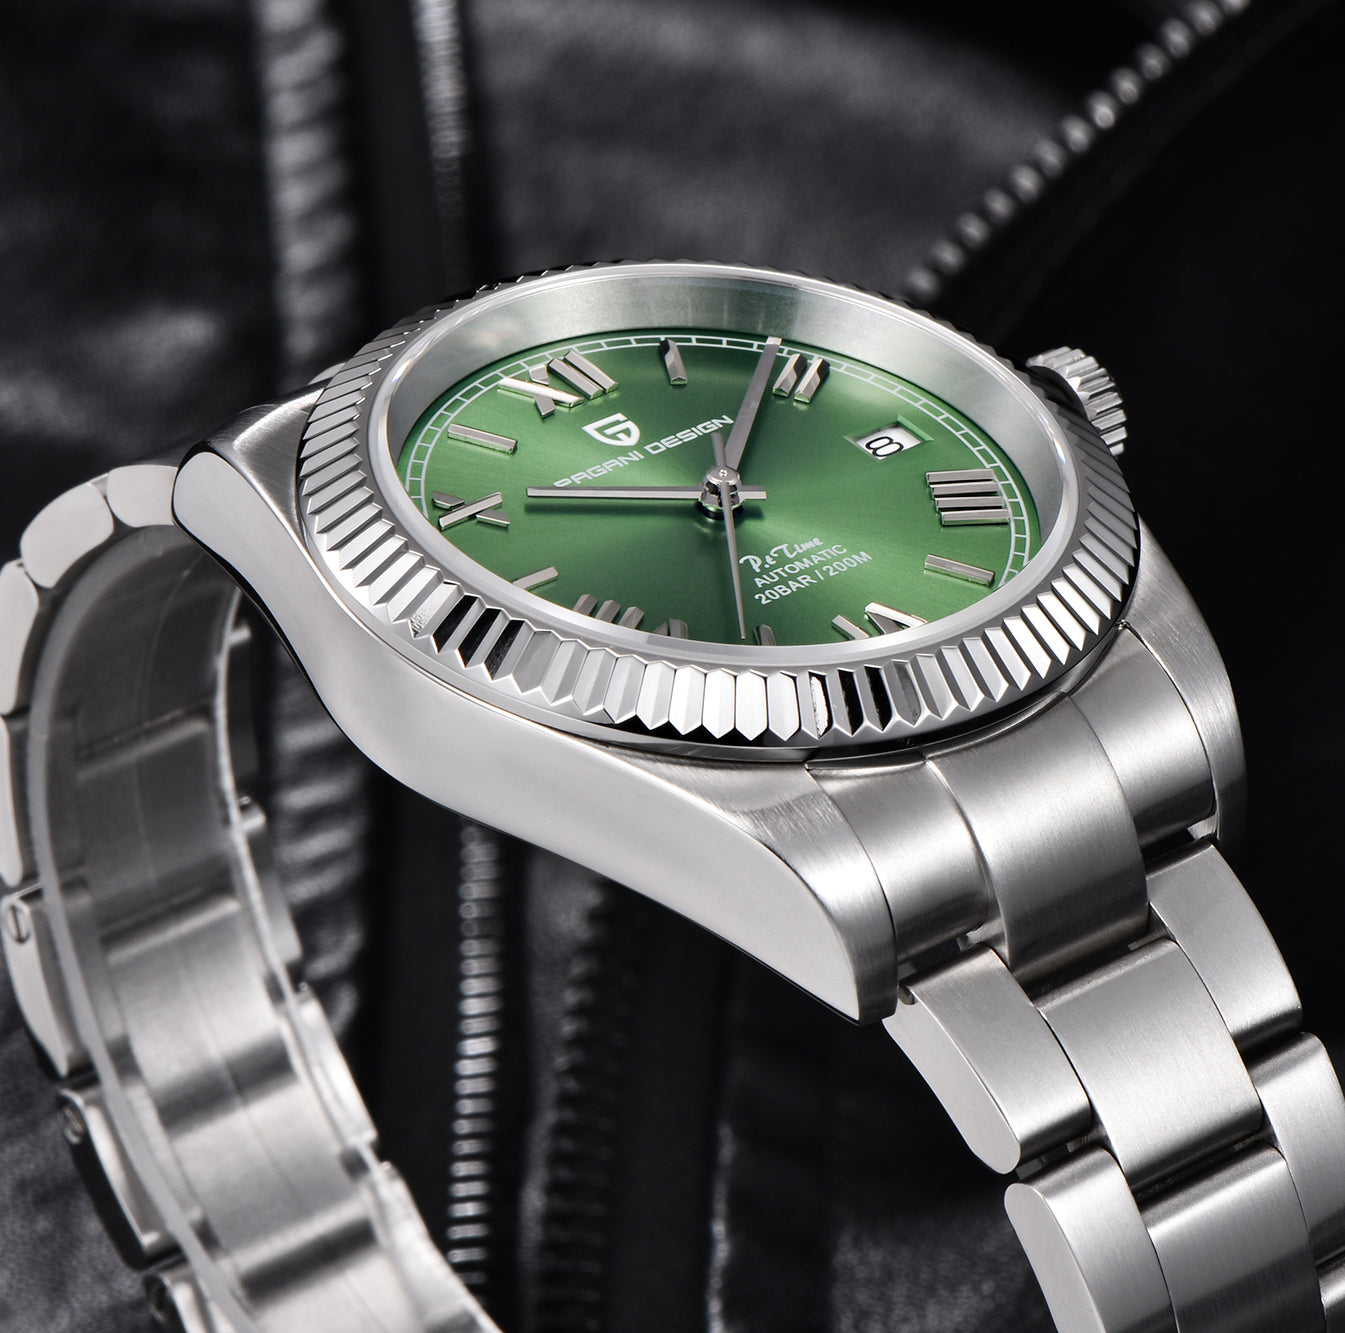 PAGANI DESIGN PD1691 Automatic Mechanical Male Wristwatch Waterproof Sport Business NH35 Wrist Watch for Men